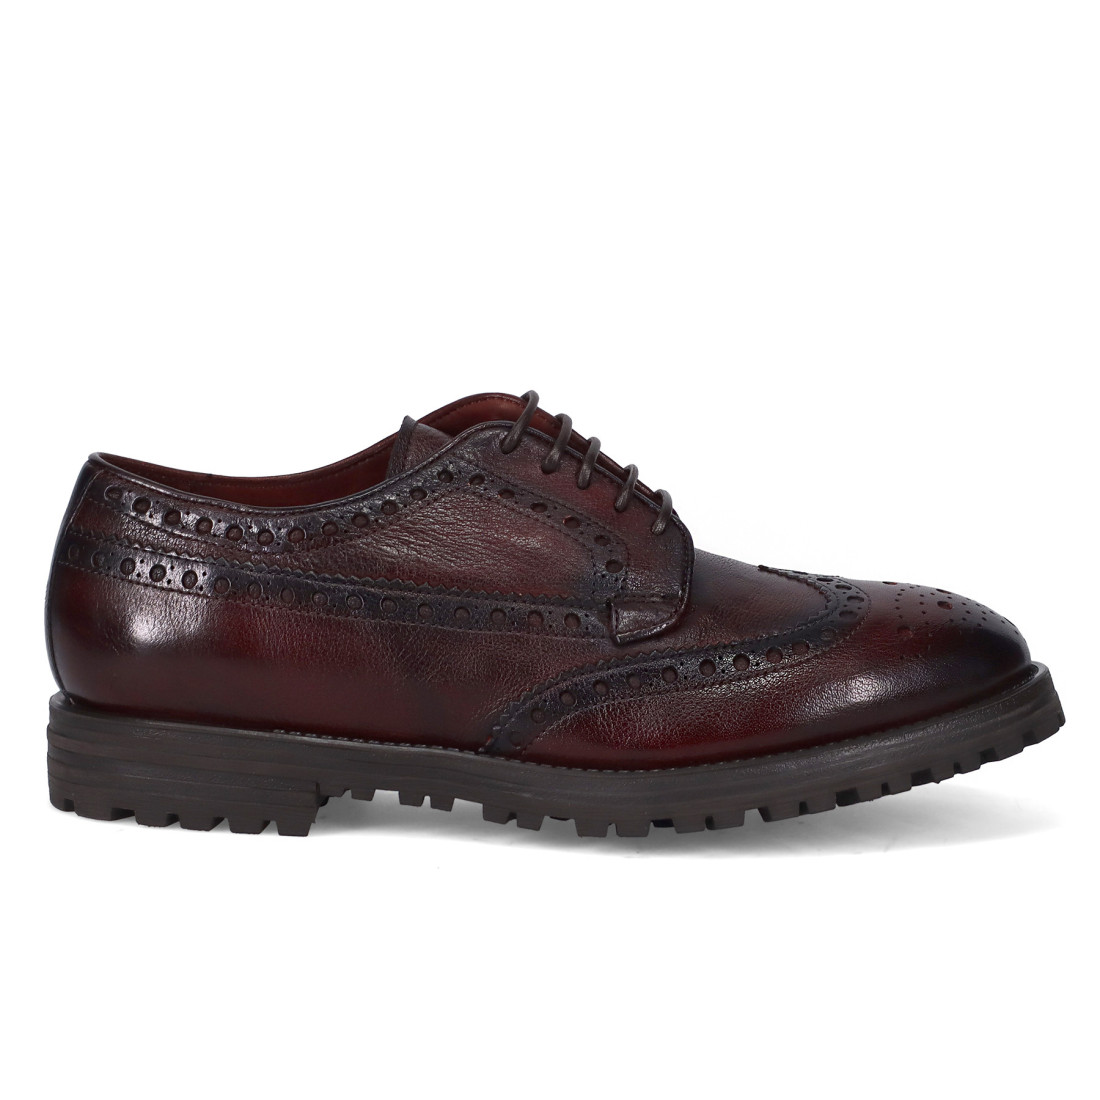 Sturlini derby brogue shoe in burgundy leather